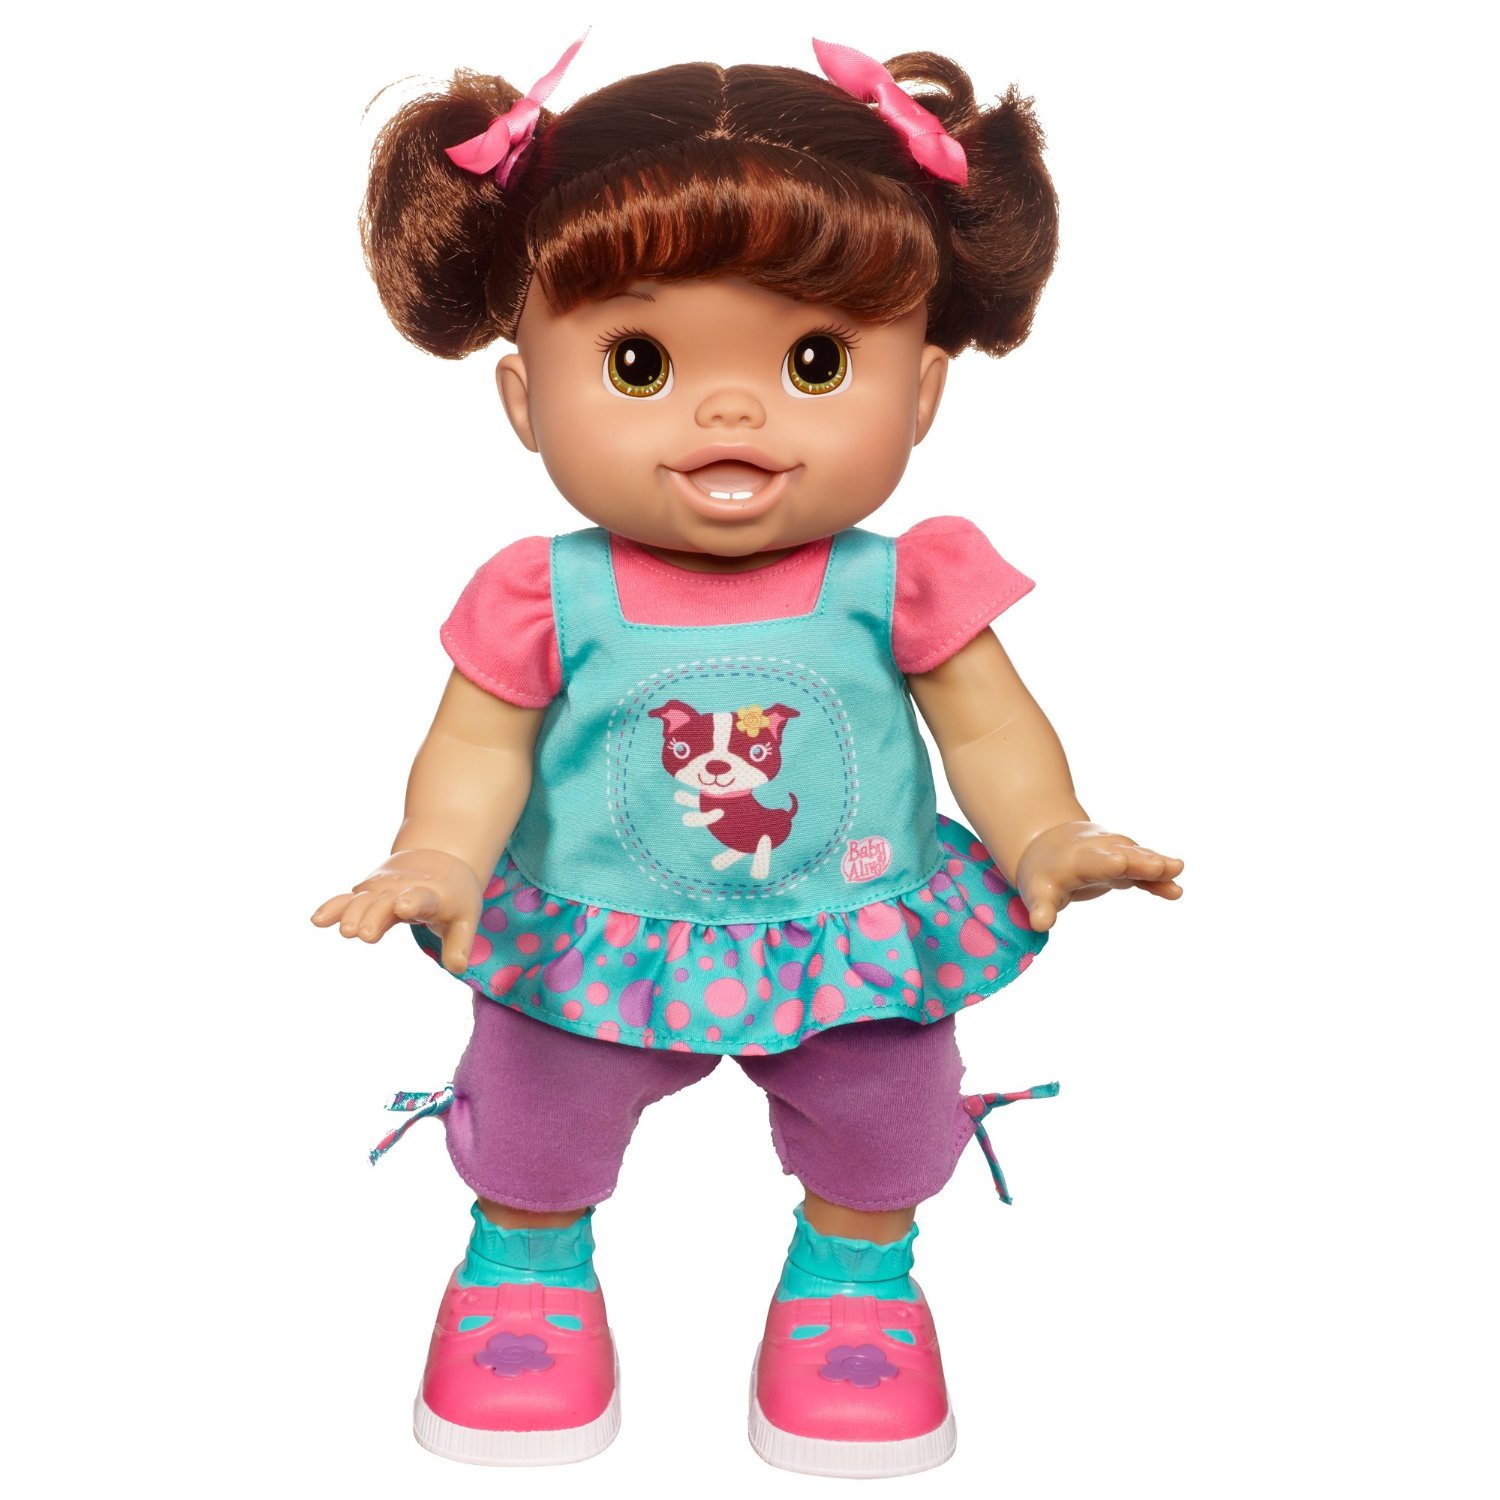 Купить куклу б у. Кукла Hasbro Baby wanna walk. Кукла Walking Doll. Живая кукла Беби. Бэйби Райз куклы.